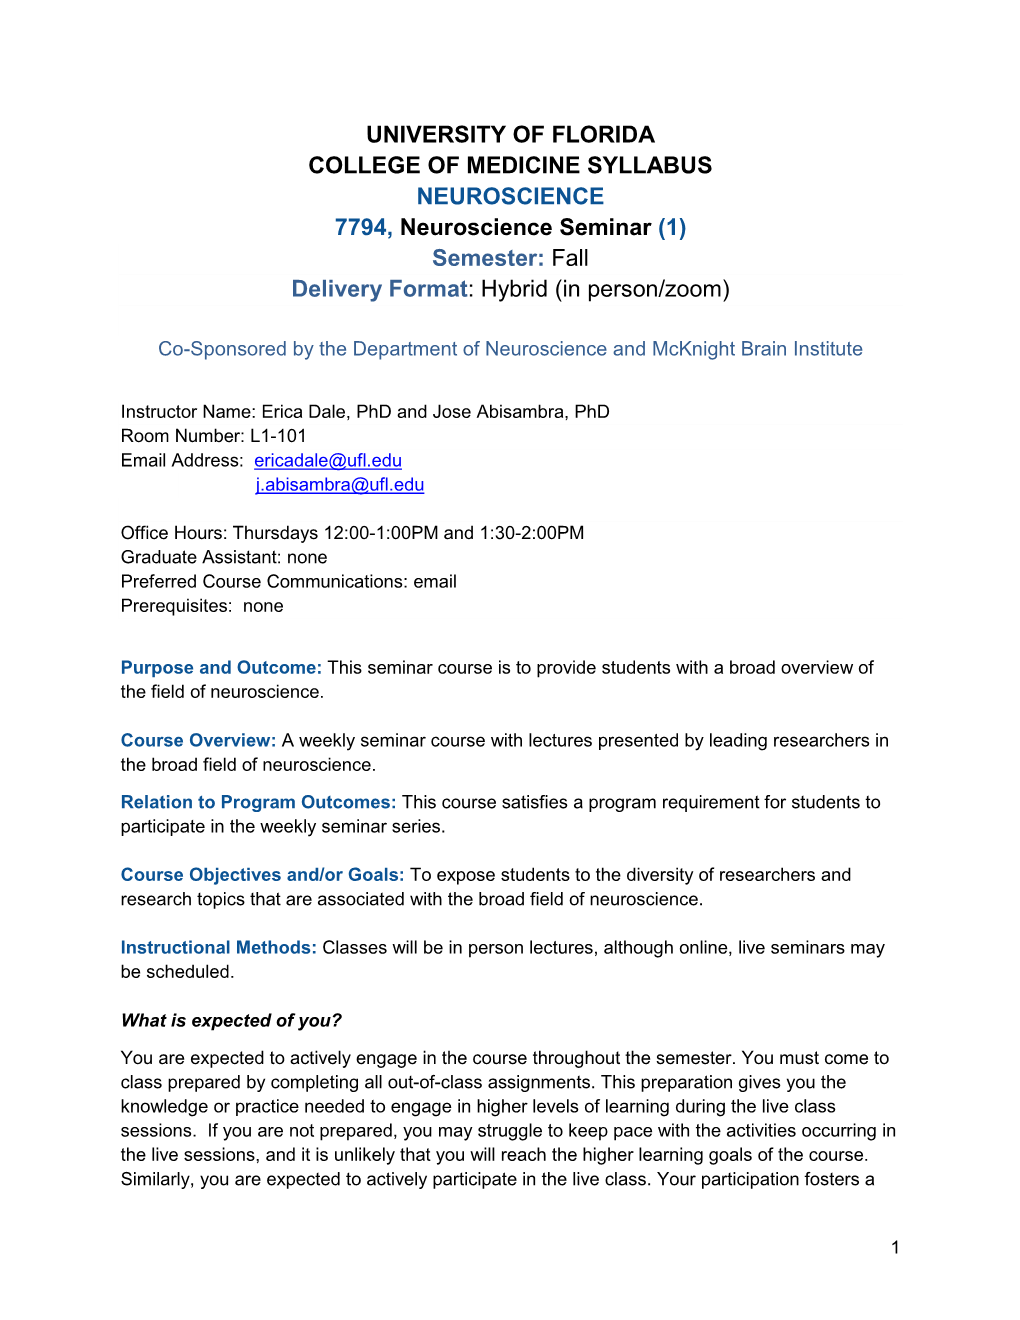 UNIVERSITY of FLORIDA COLLEGE of MEDICINE SYLLABUS NEUROSCIENCE 7794, Neuroscience Seminar (1) Semester: Fall Delivery Format: Hybrid (In Person/Zoom)